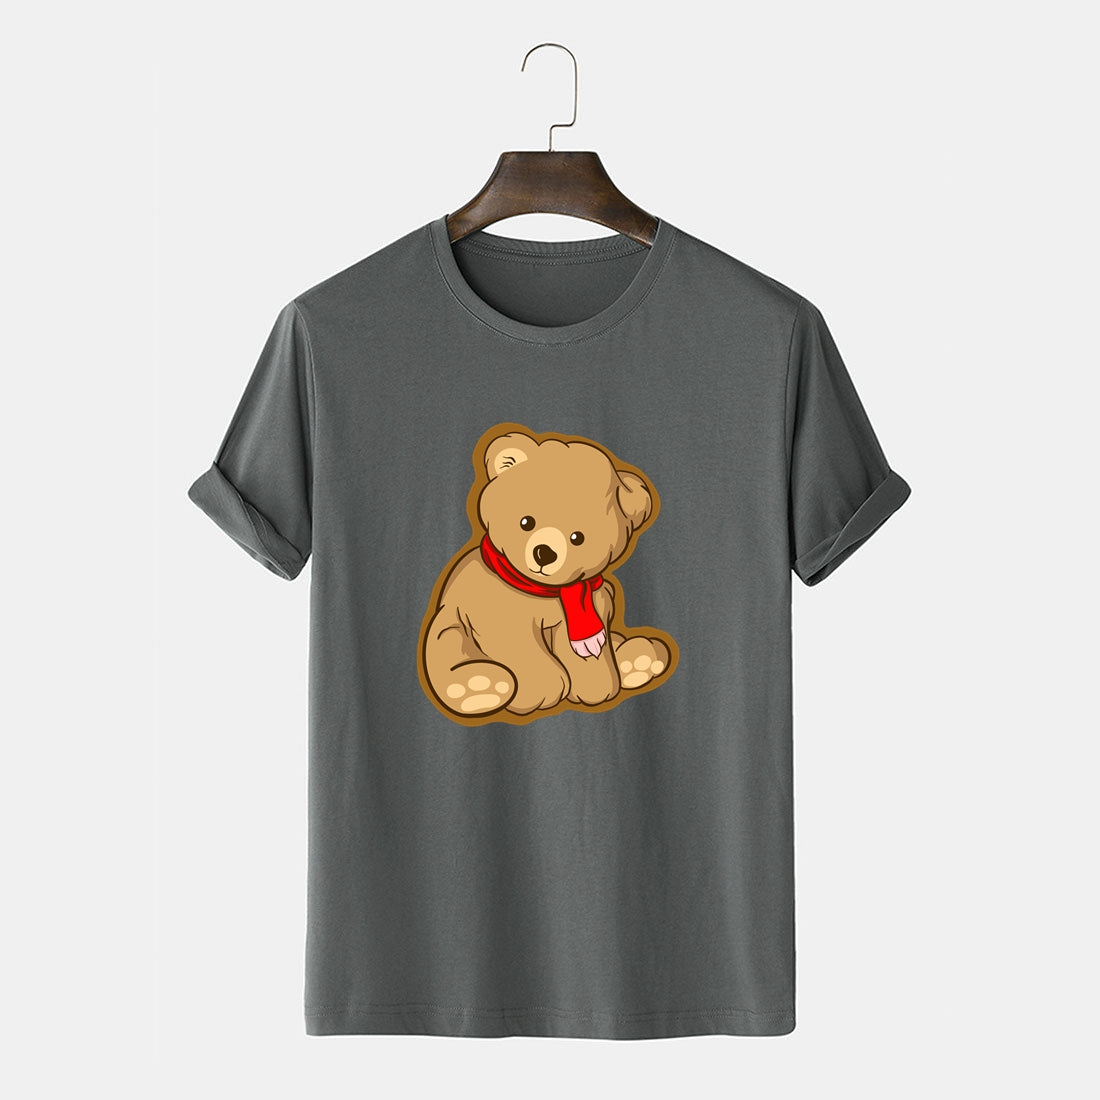 Cute Bear T Shirt Crewneck Short Sleeves Tee Cotton Tops Breathable Soft